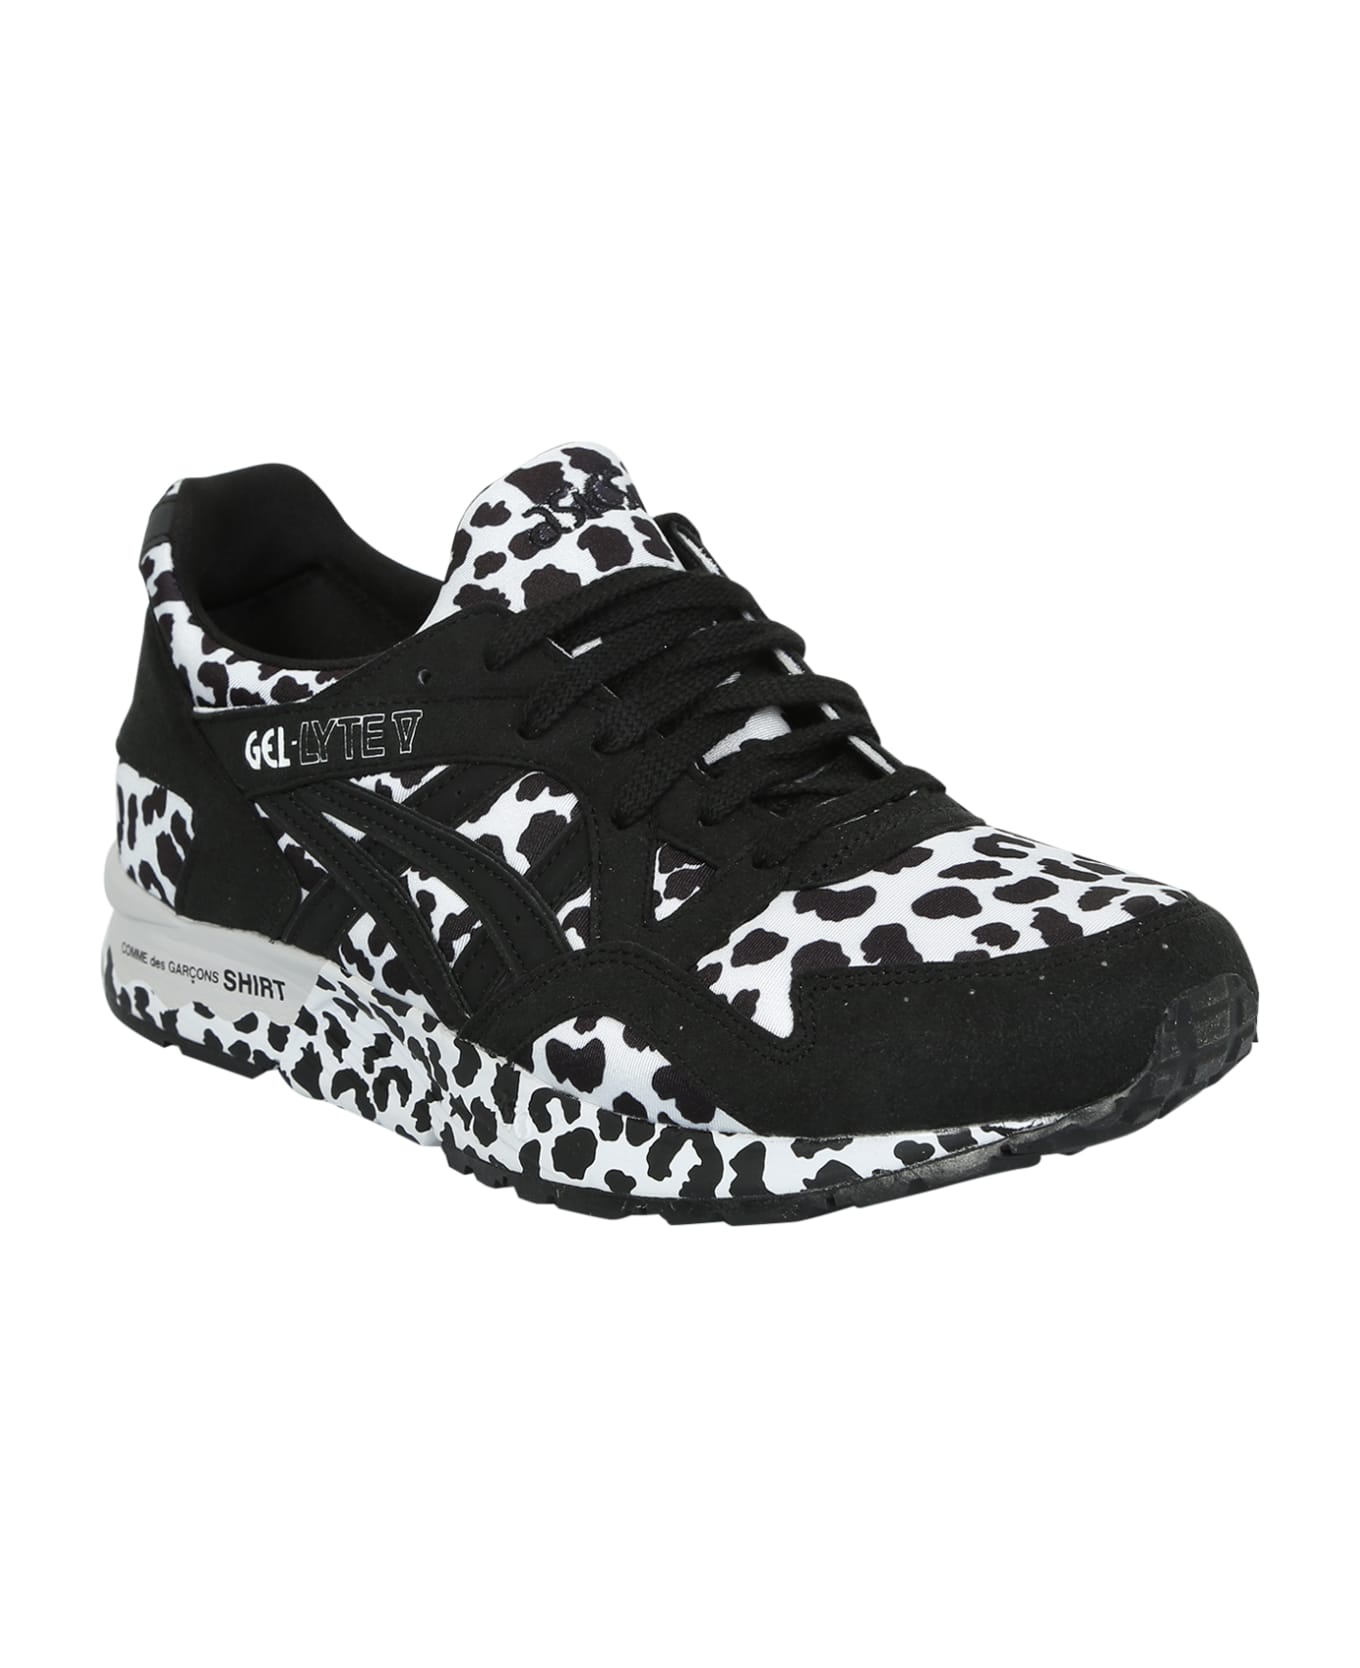 Comme des Garçons Shirt Leopard Print Asics Gel Lyte Sneakers - Black